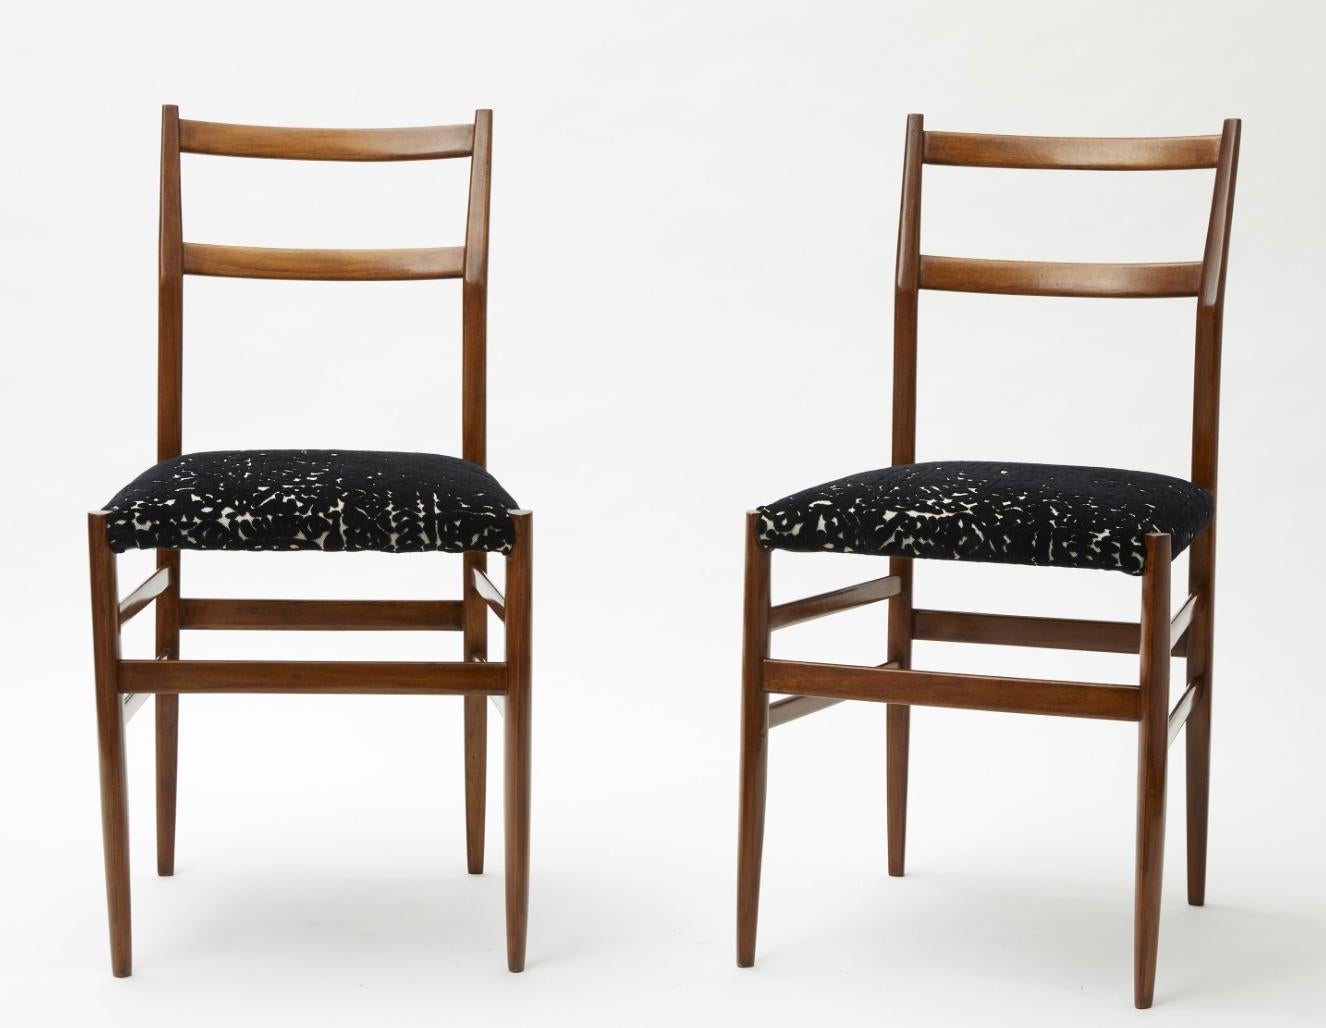 Gio Ponti pair of chairs 1950 wood velvety fabric, Italy.